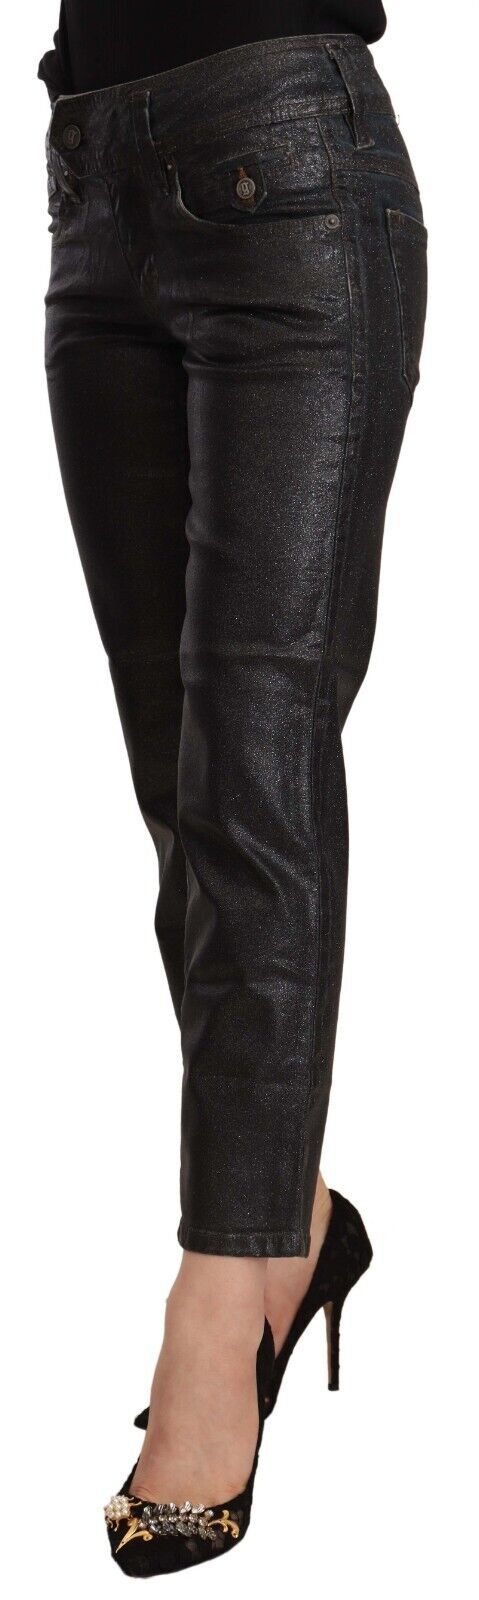 John Galliano Chic Black Glittered Cropped Women's Pants